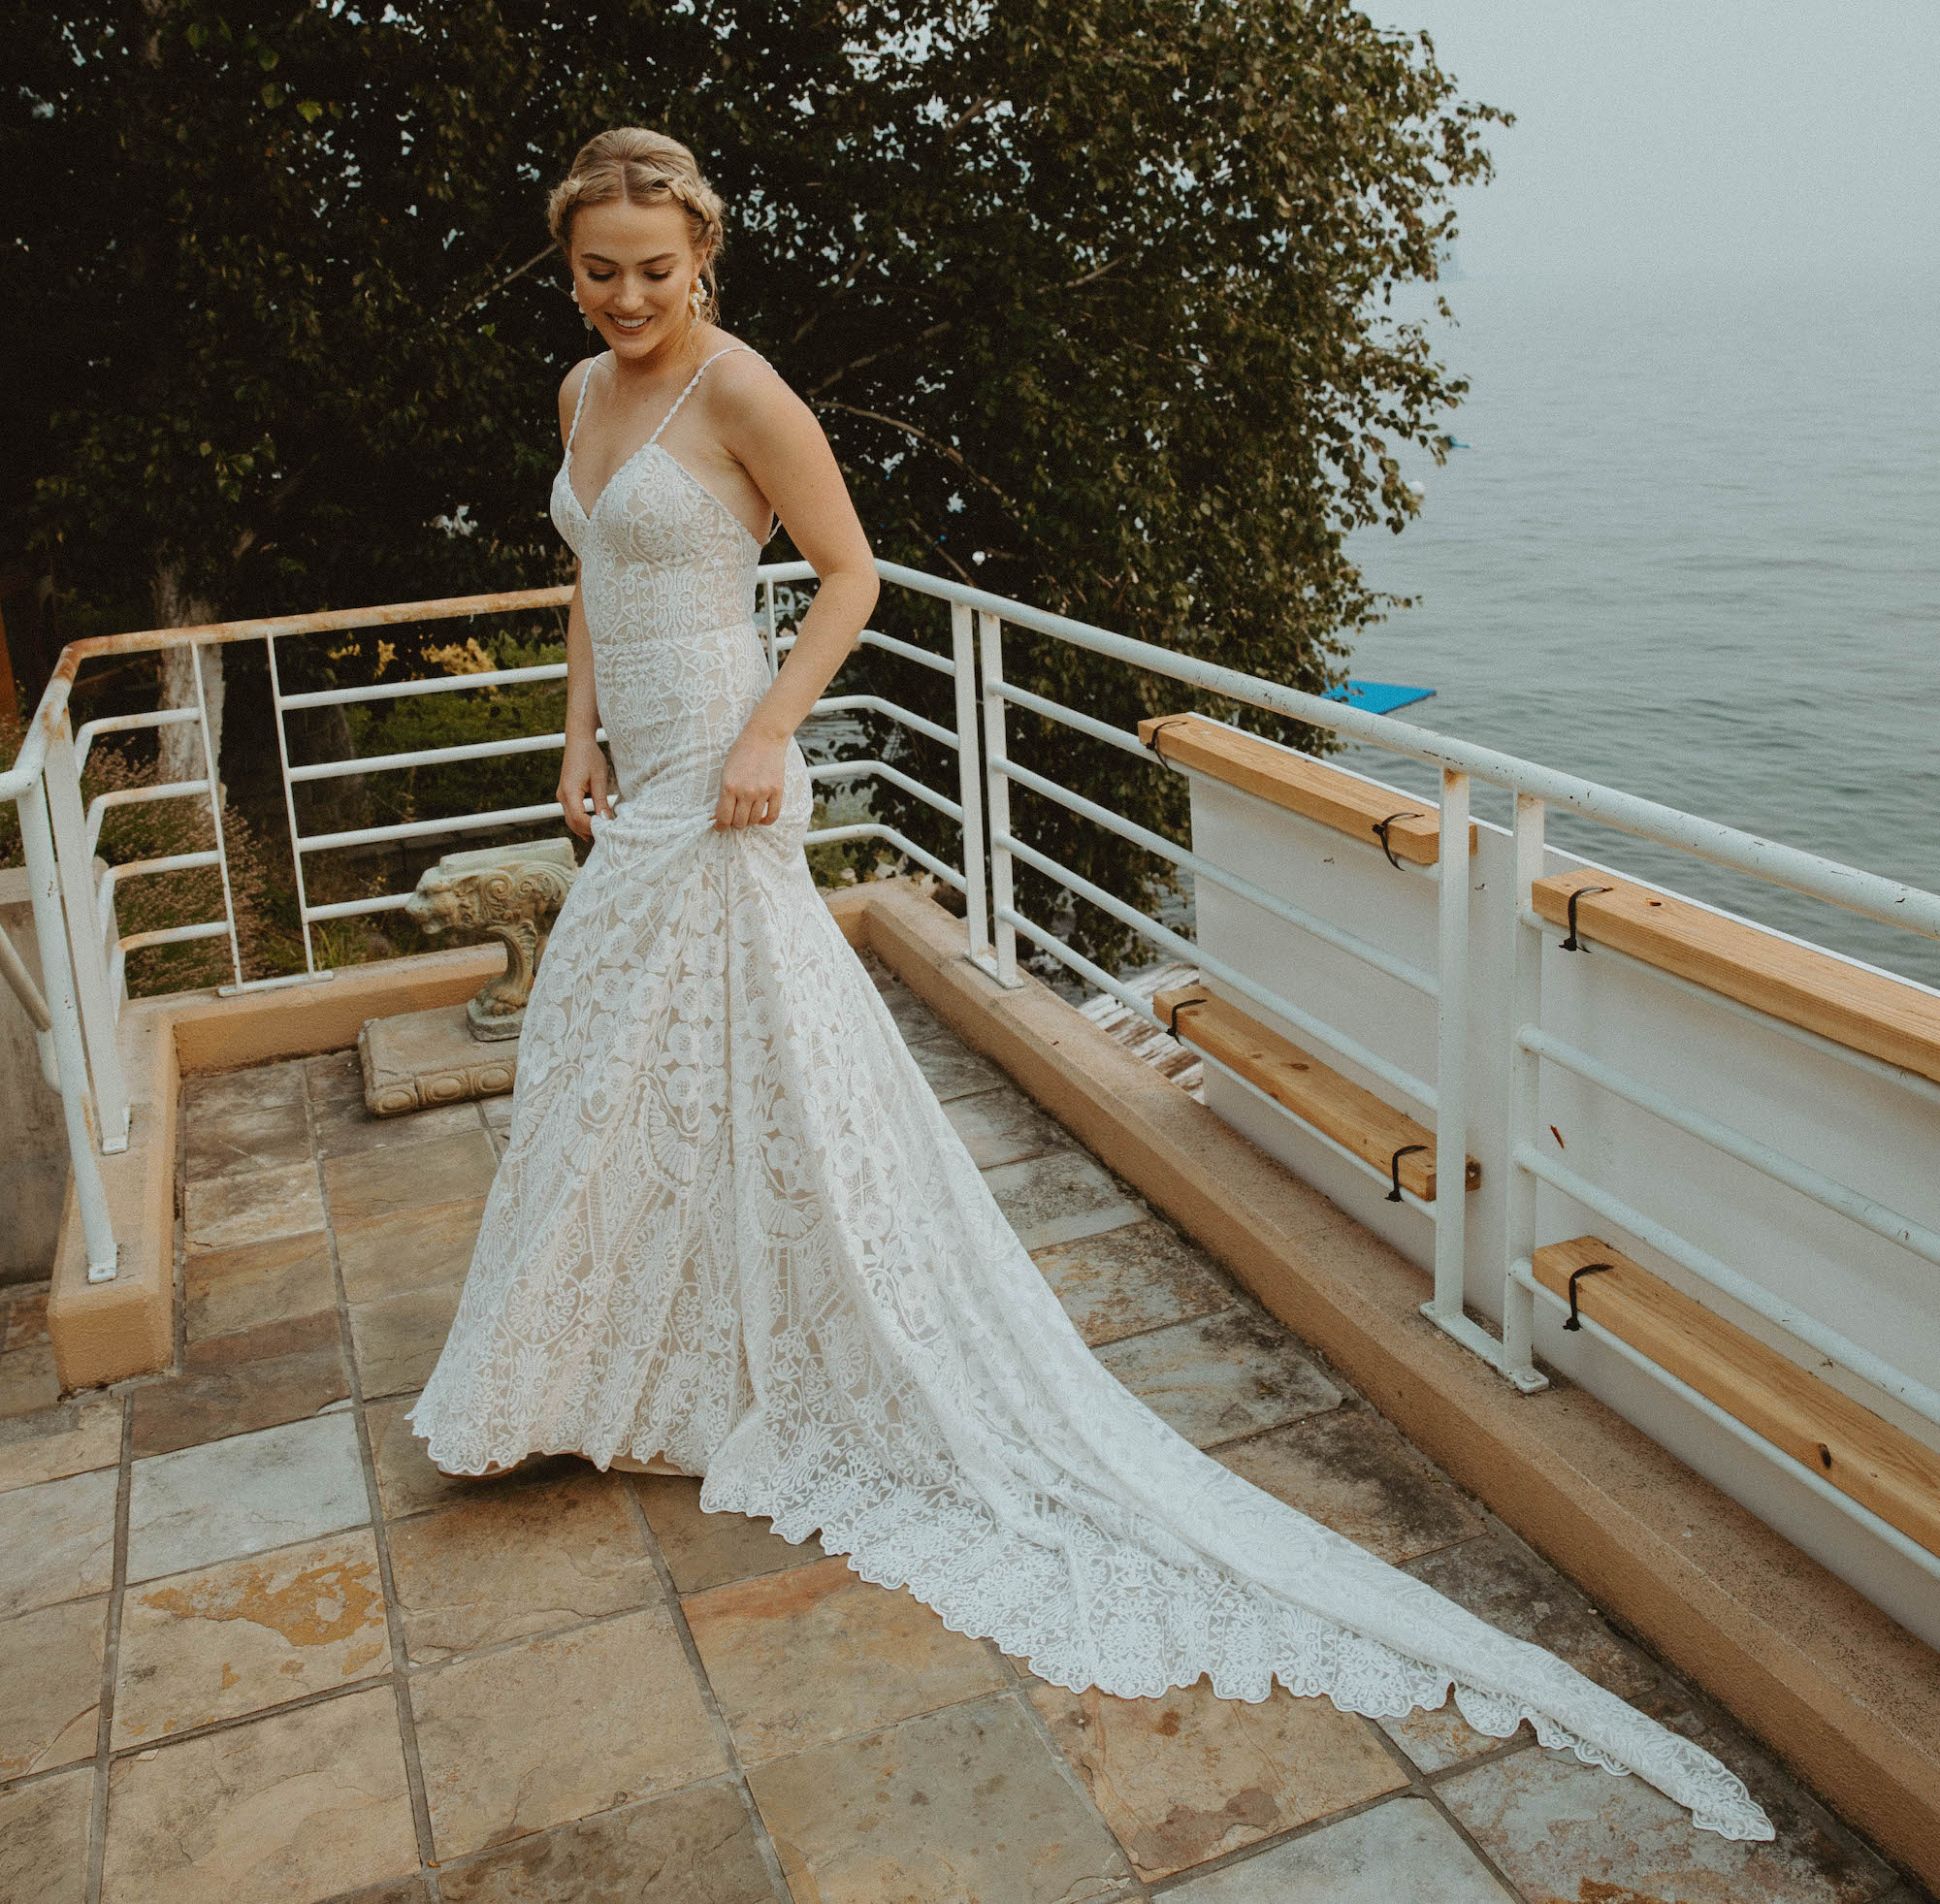 Bride Says She Felt 'Euphoric' Wearing Her Sheer Wedding Dress